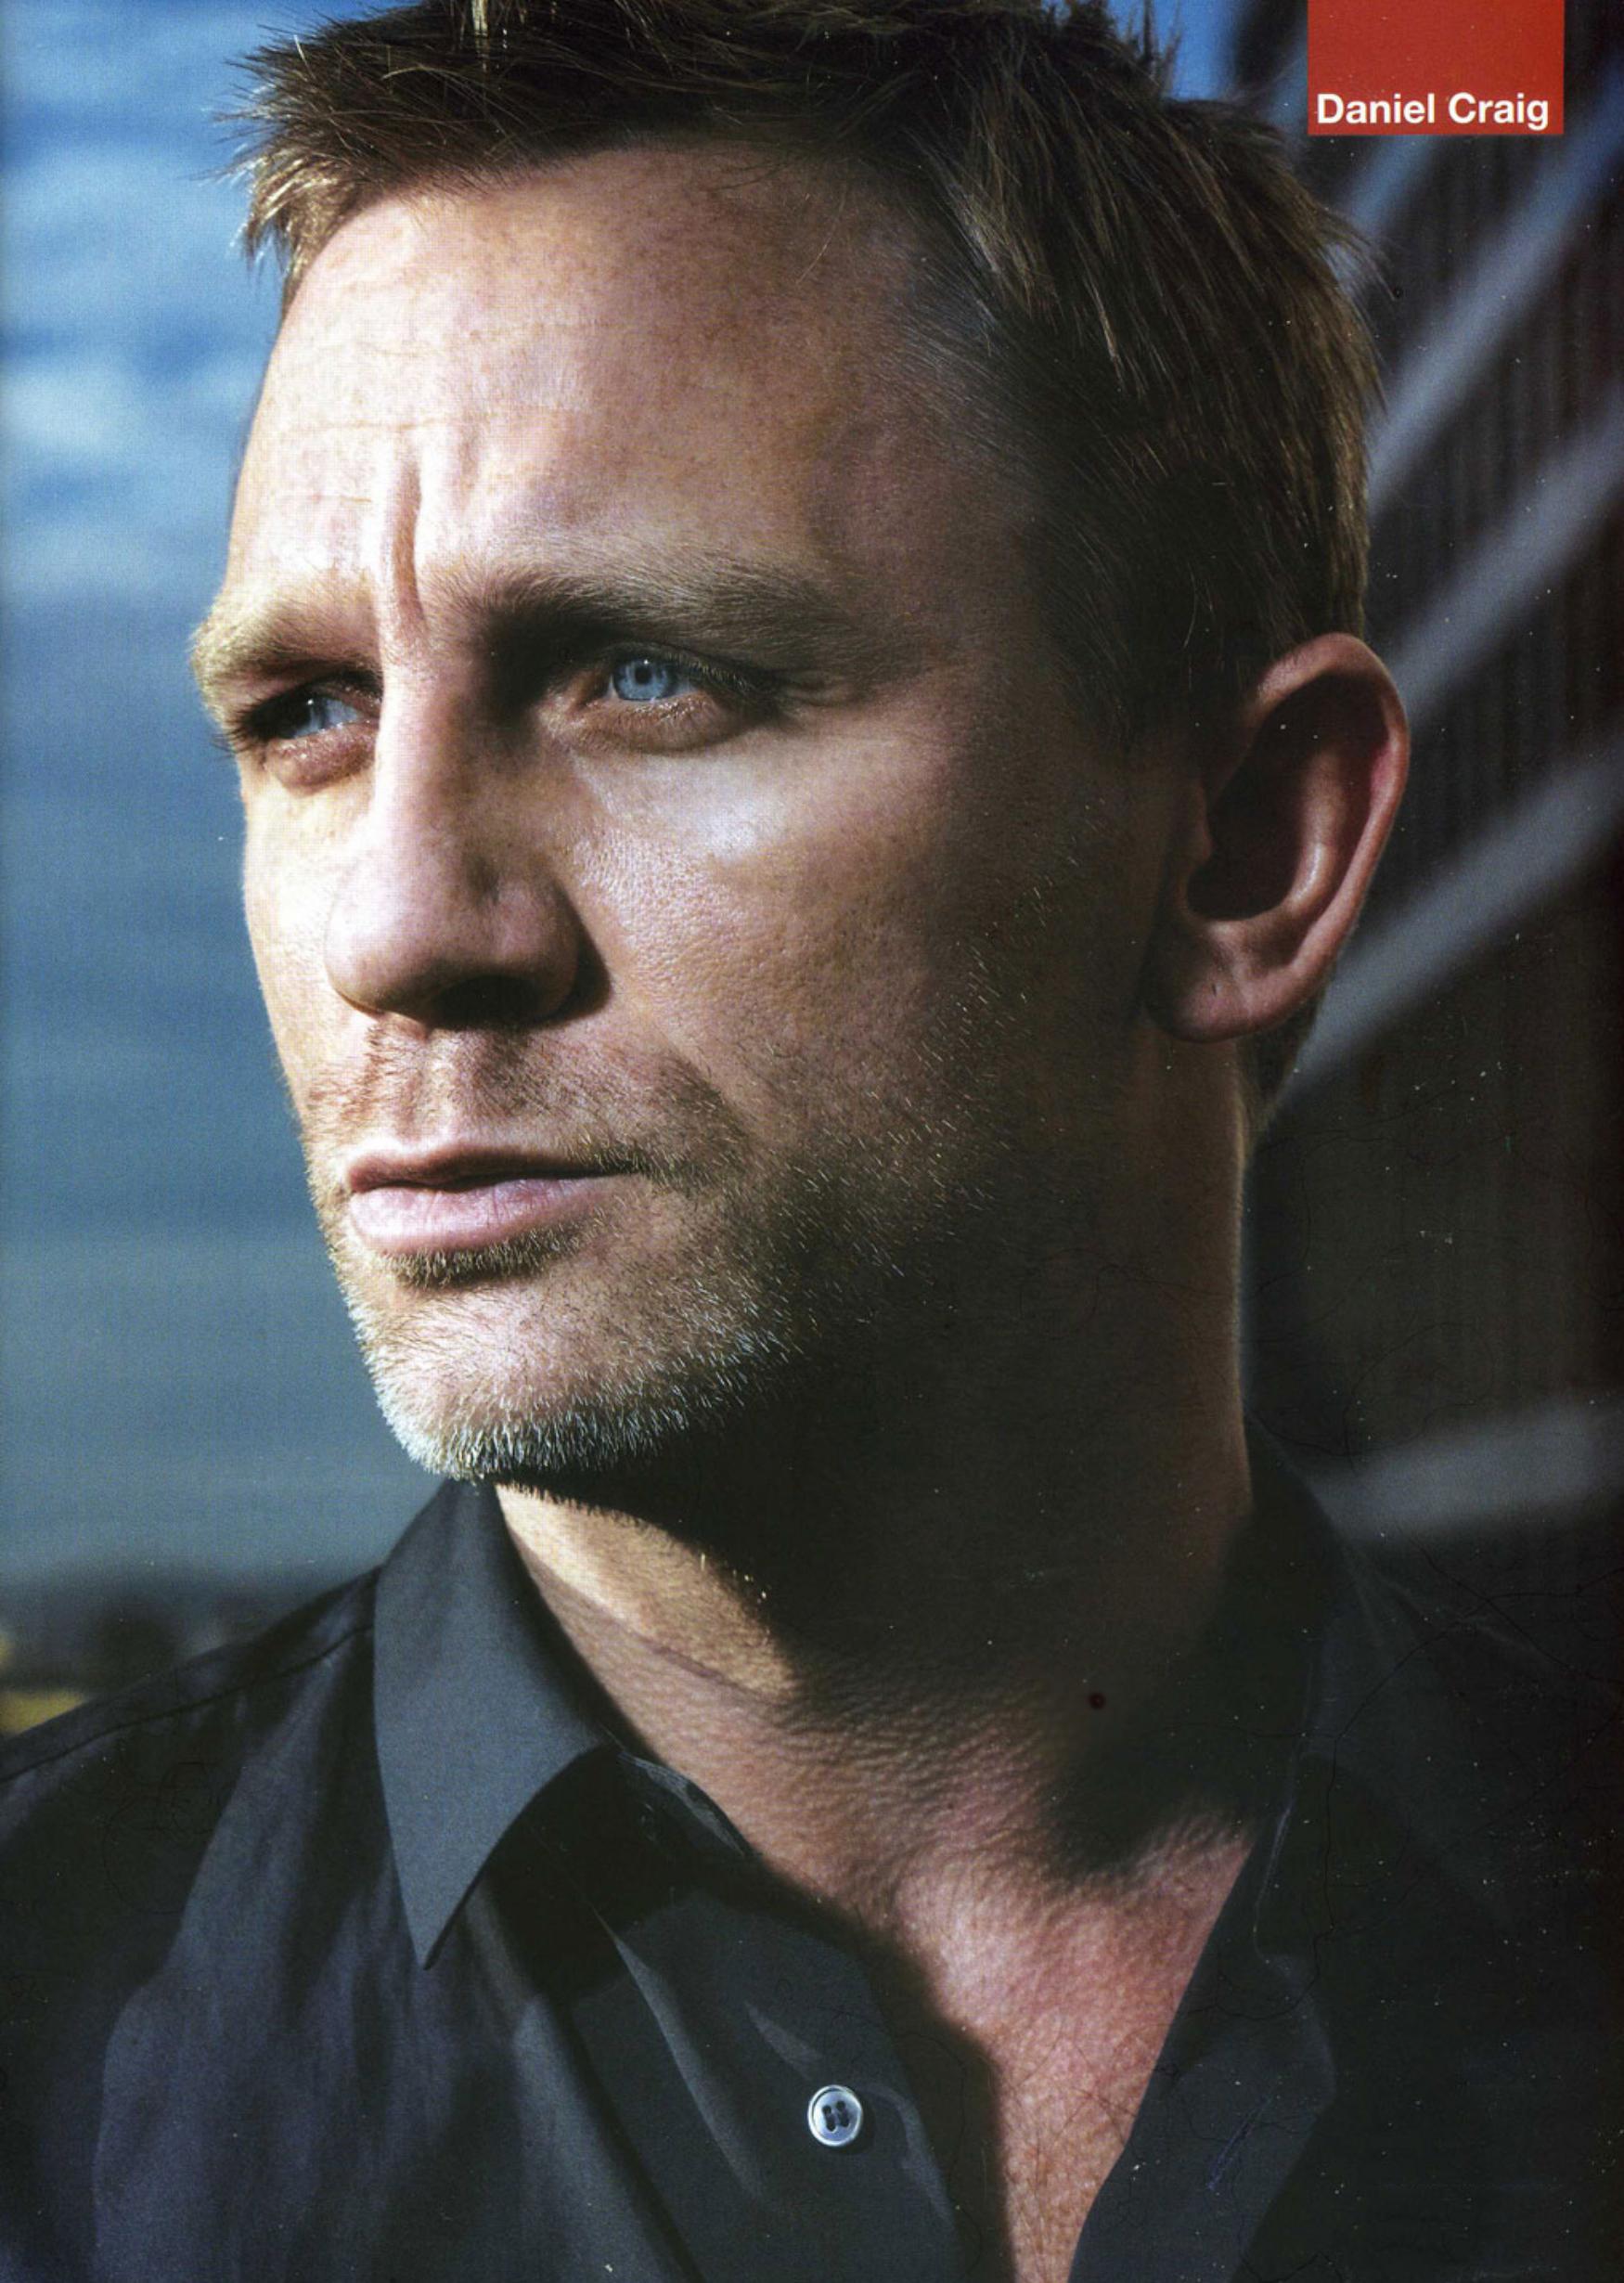 Daniel Craig photo 262 of 798 pics, wallpaper - photo #303371 - ThePlace2